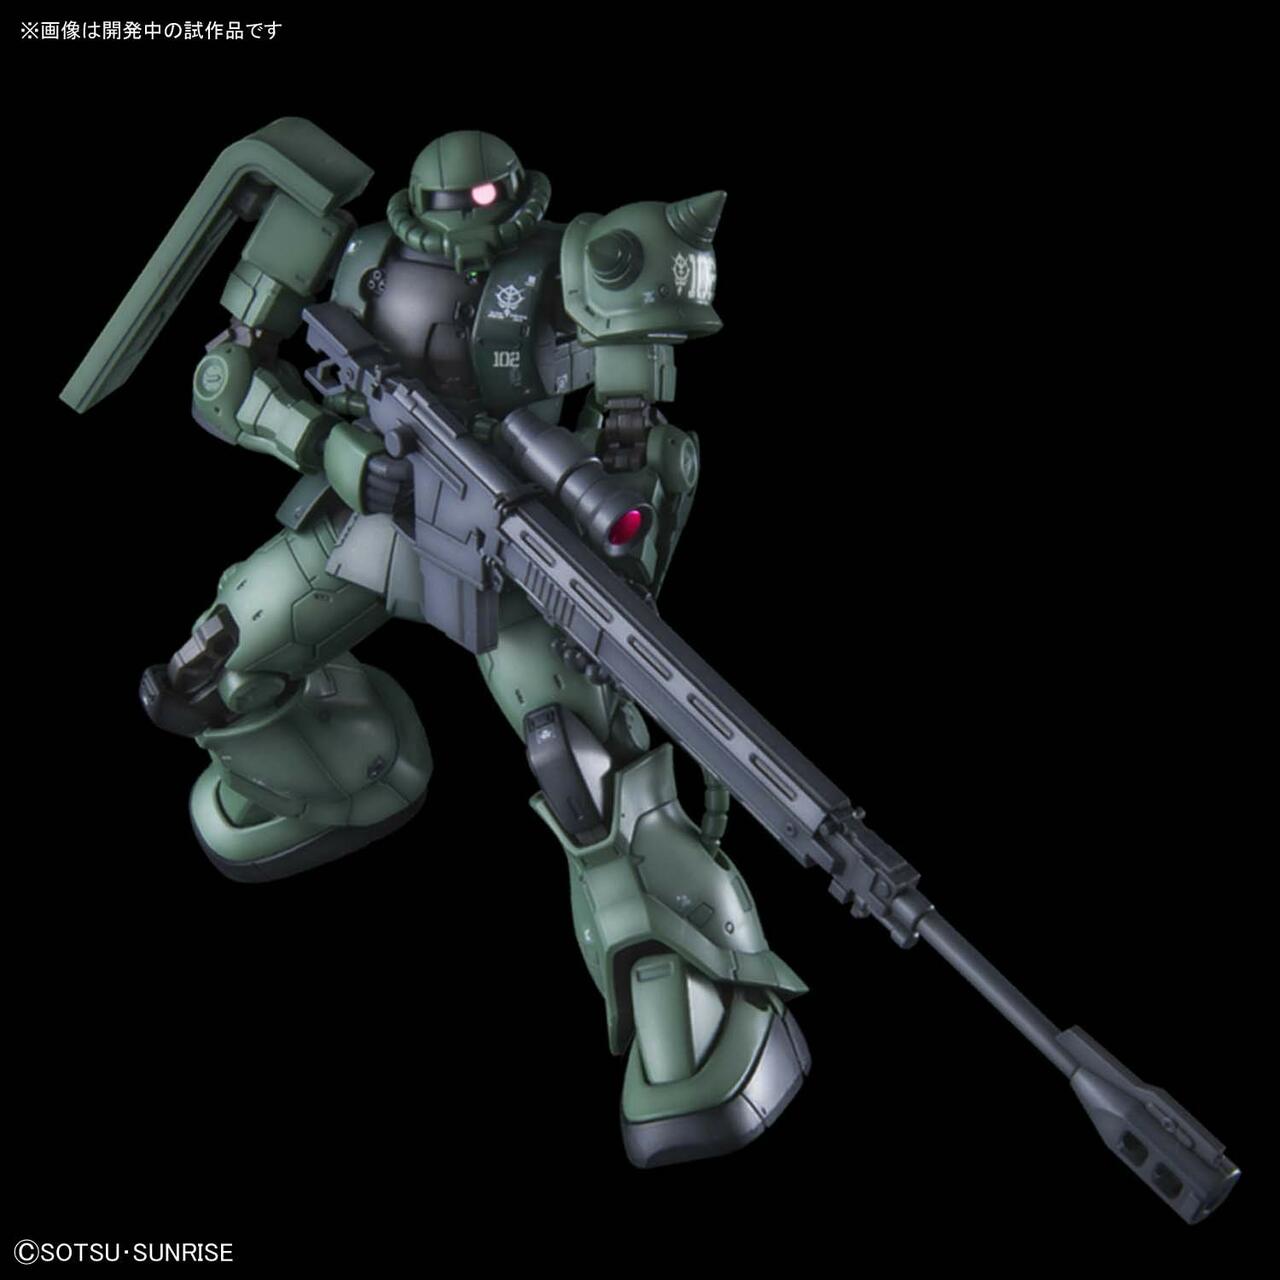 Bandai HG #25 1/144 Zaku II Type C-6/R6 "Gundam The Origin"